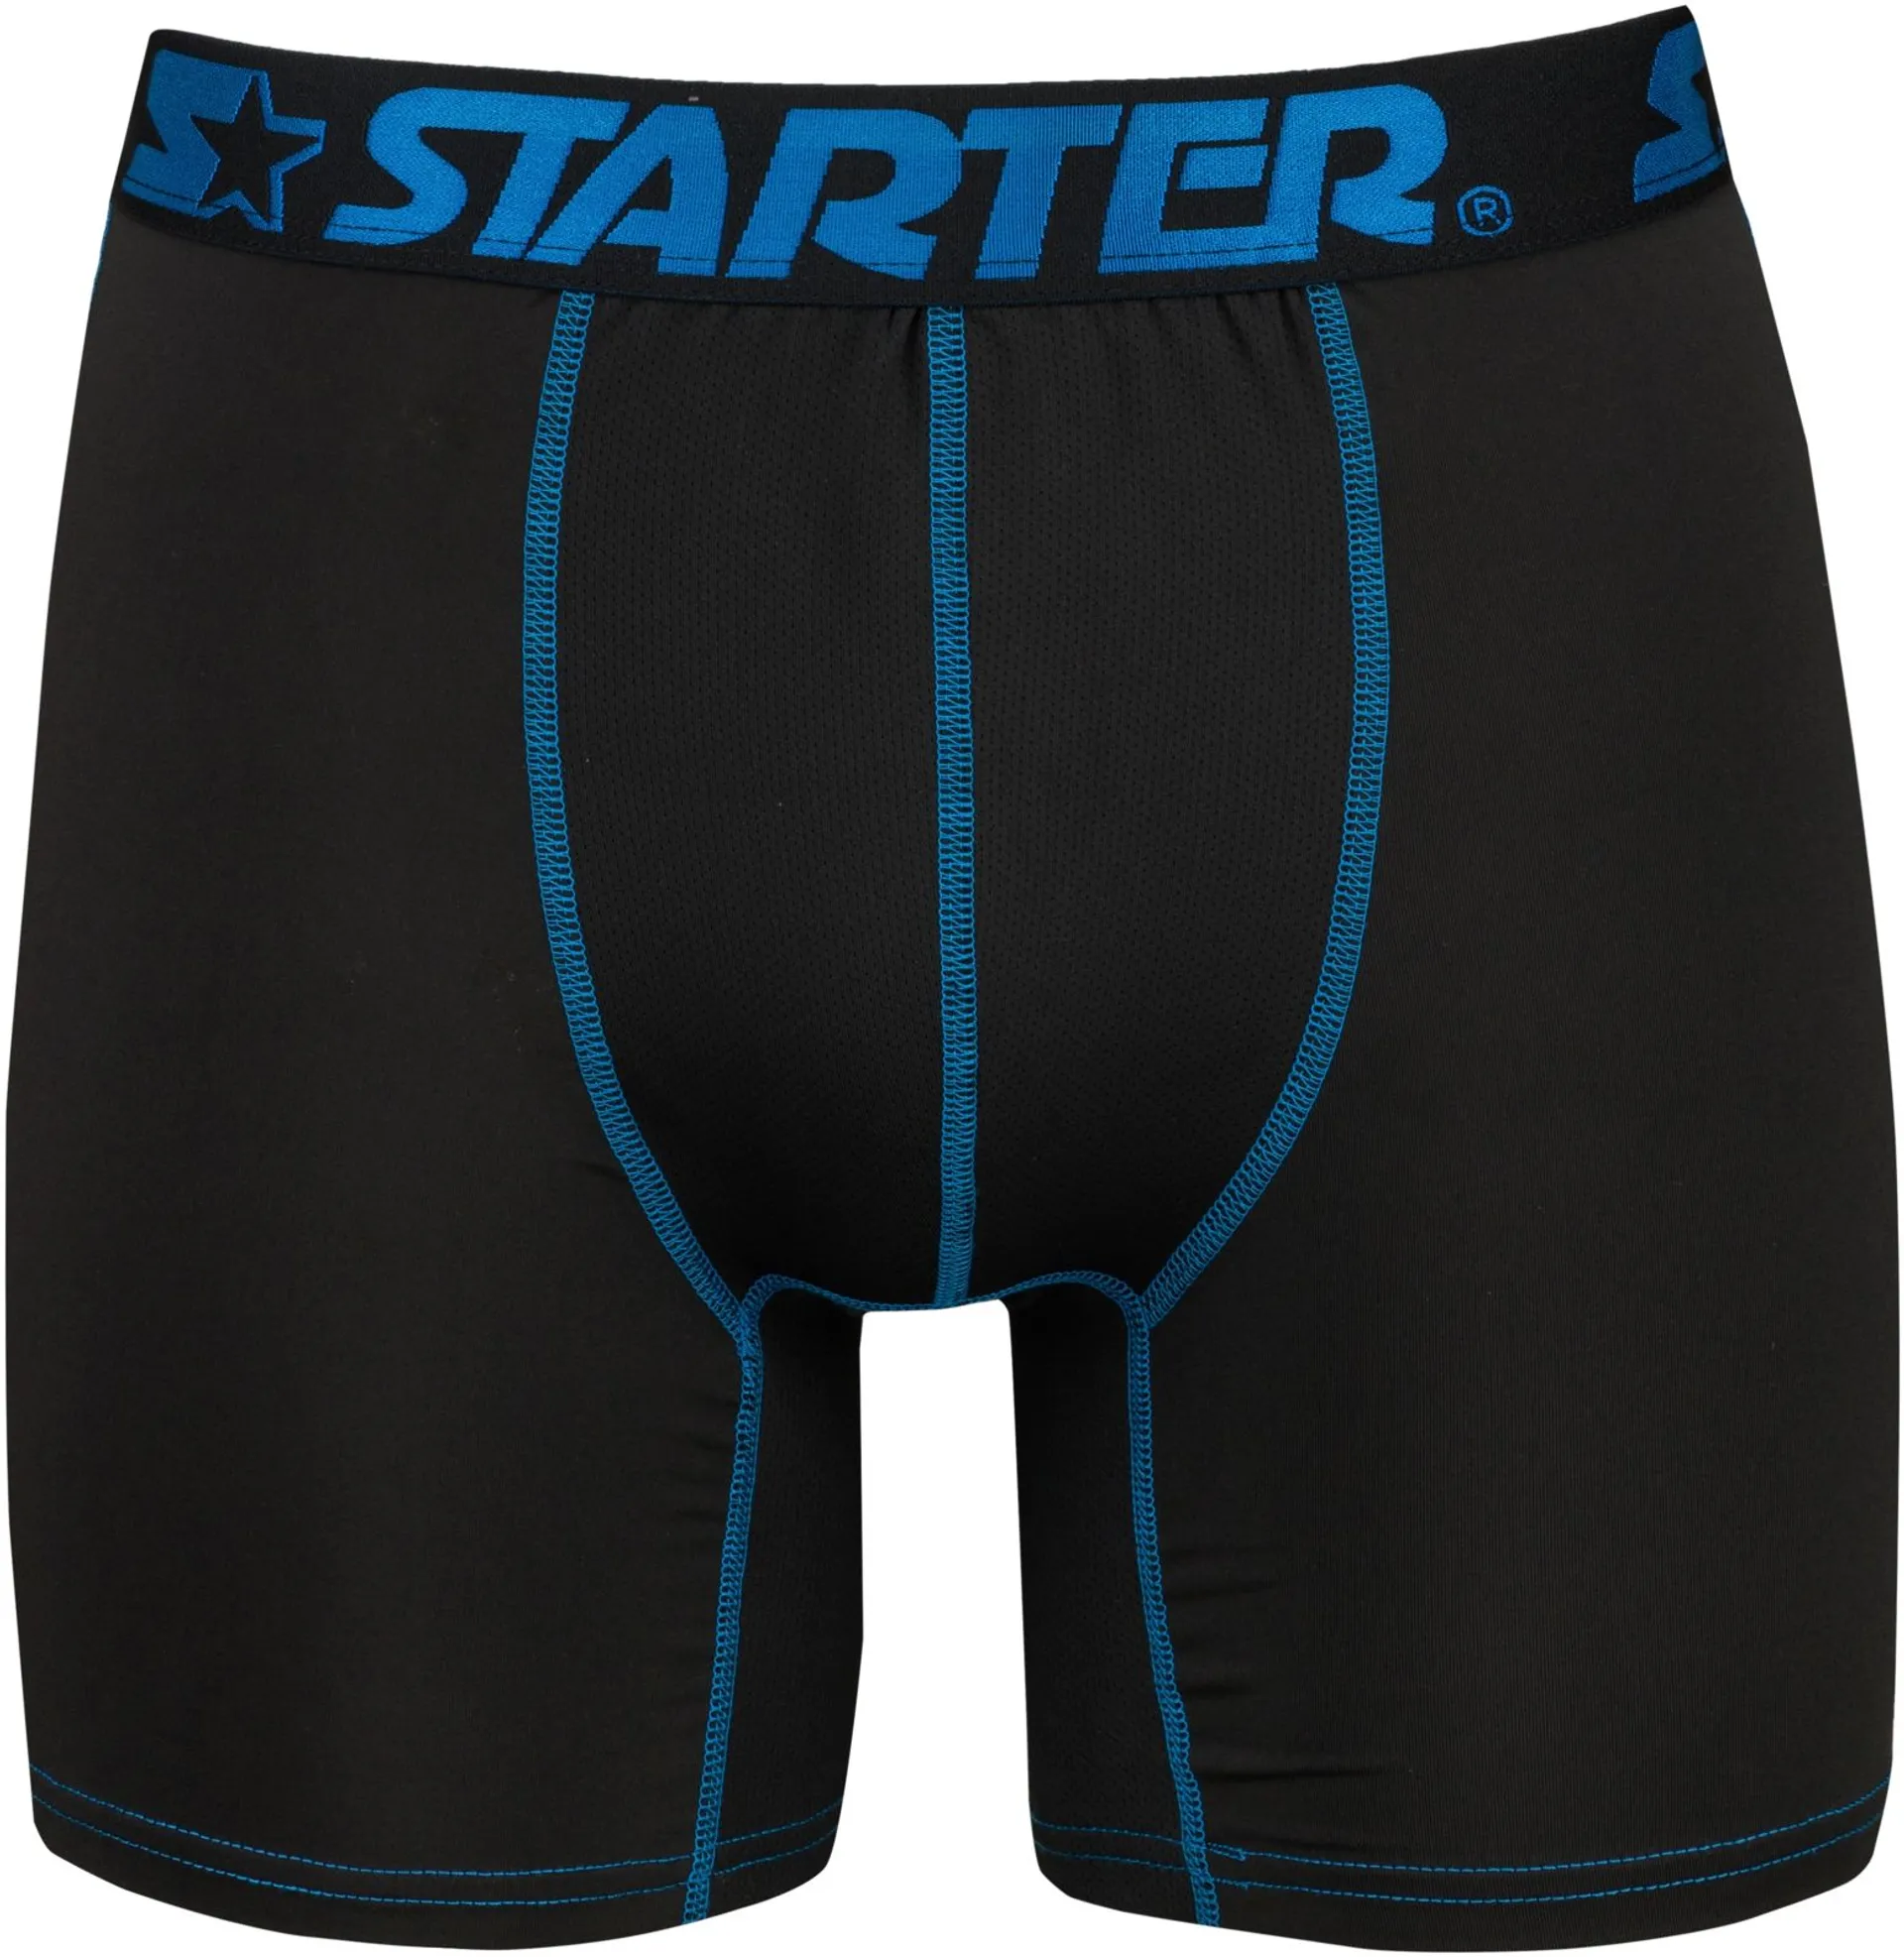 Starter miesten tekniset bokserit YM0017469 - Musta/sininen